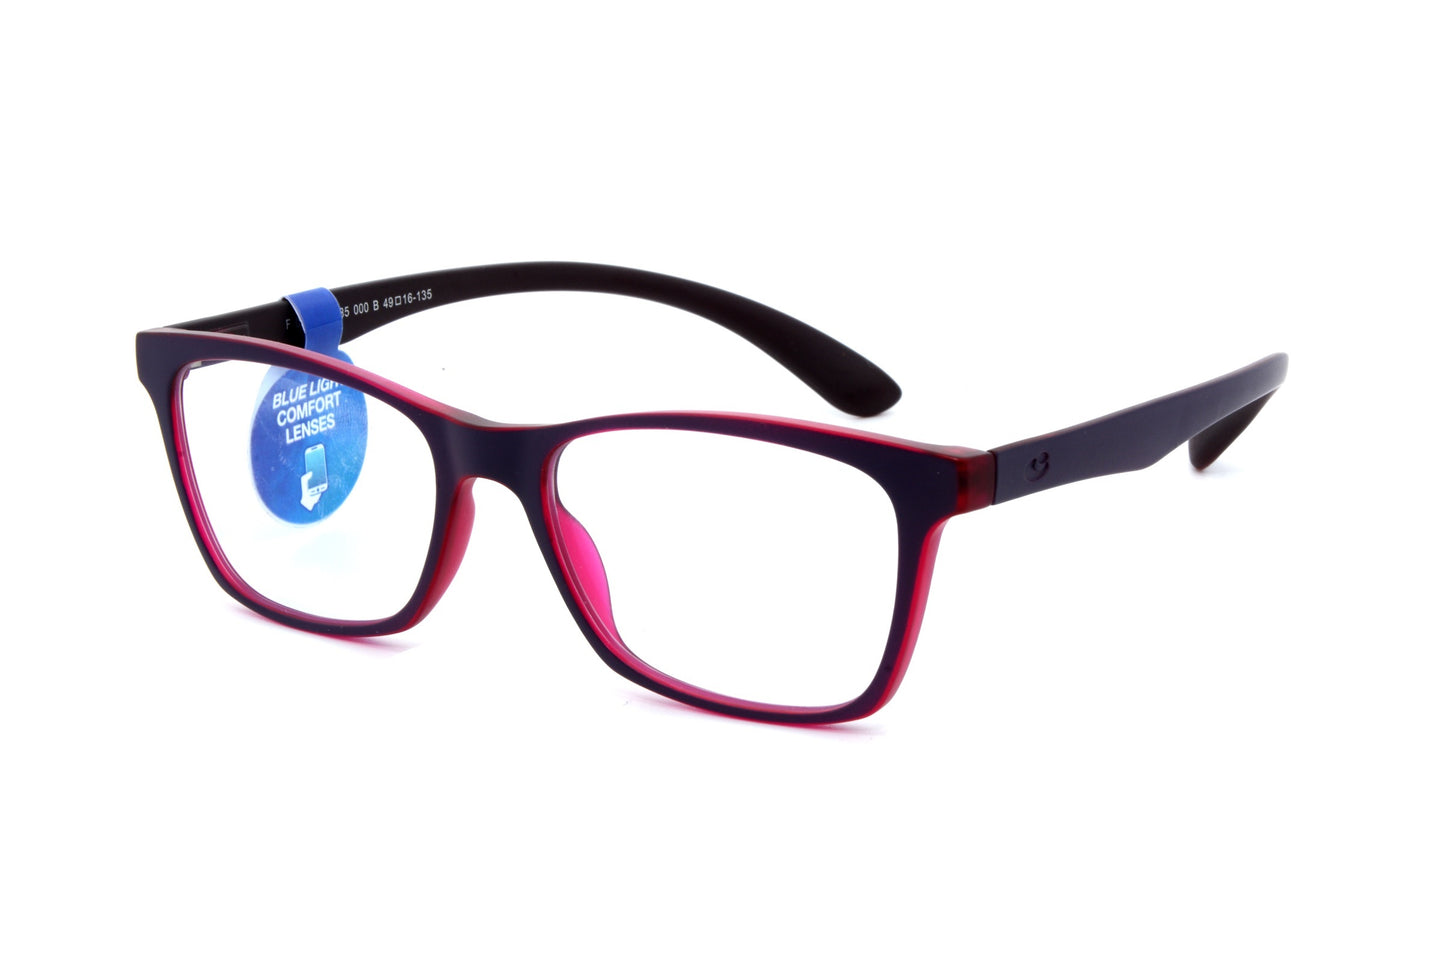 Centrostyle eyewear Blue light F027049285000B - Optics Trading